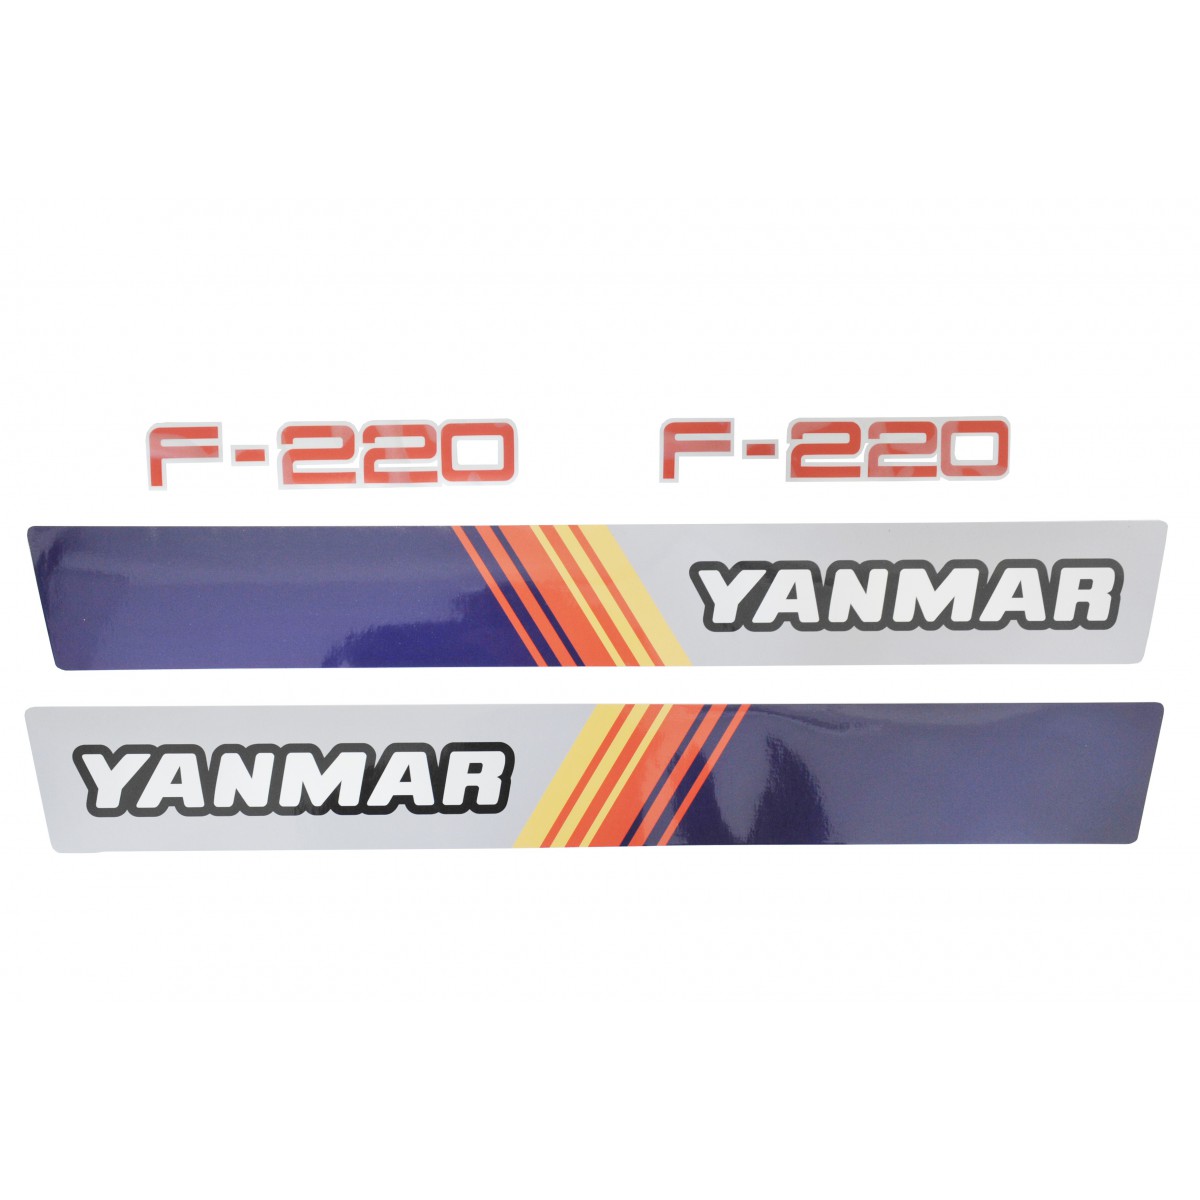 Autocollants Yanmar F-220